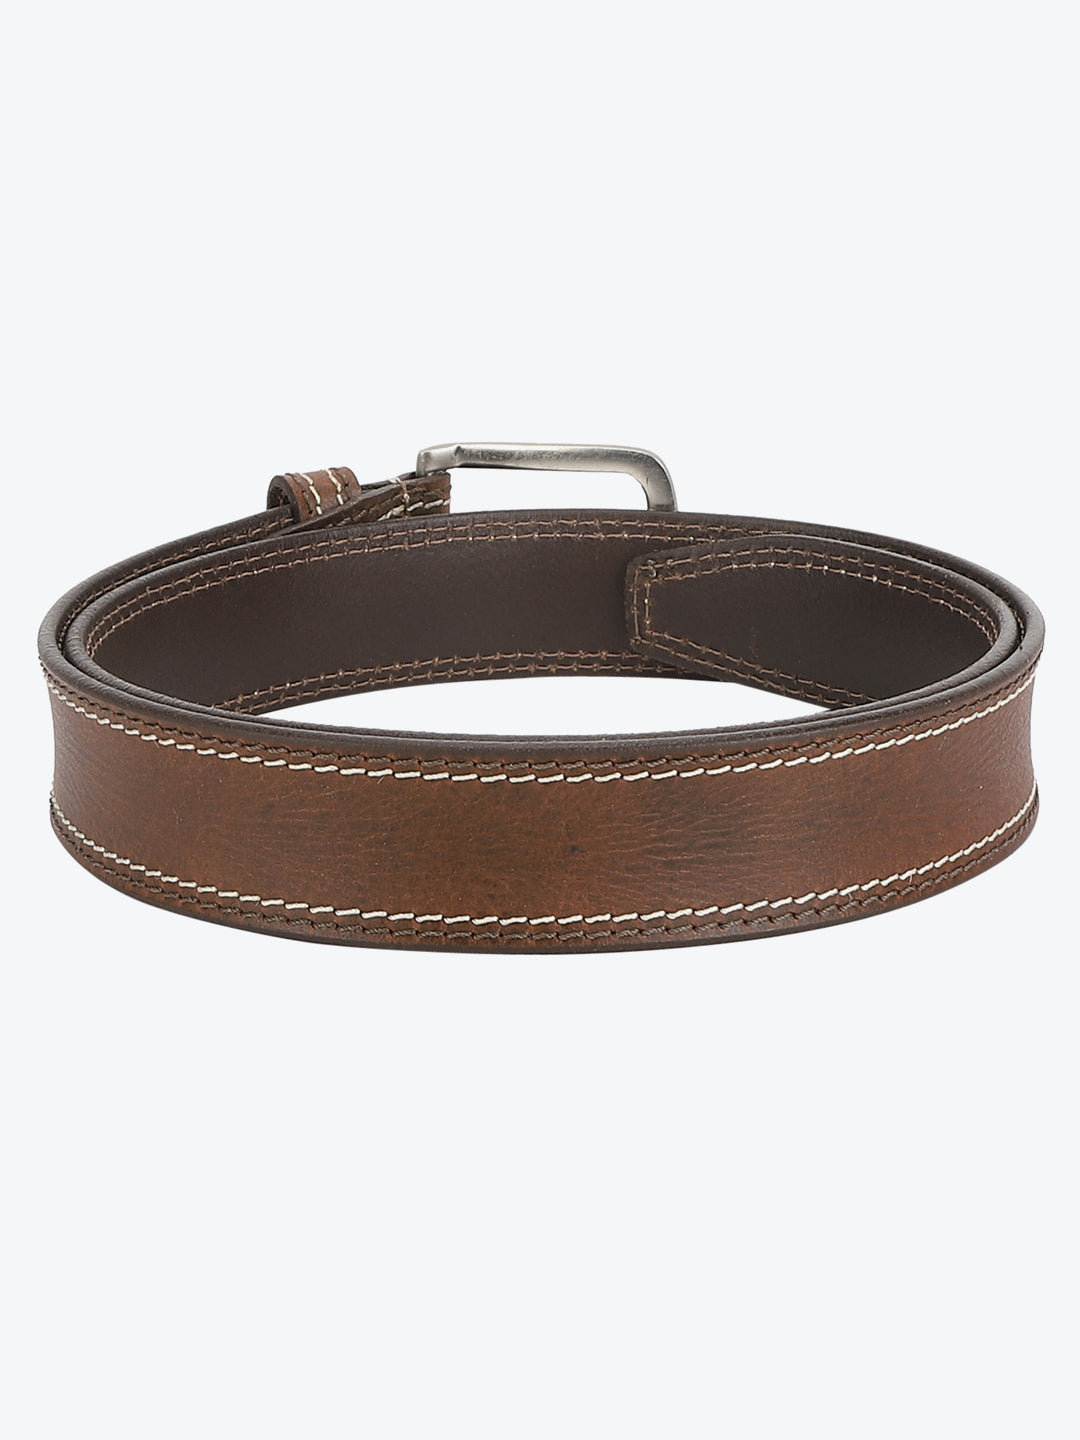 Stitched design leather belt